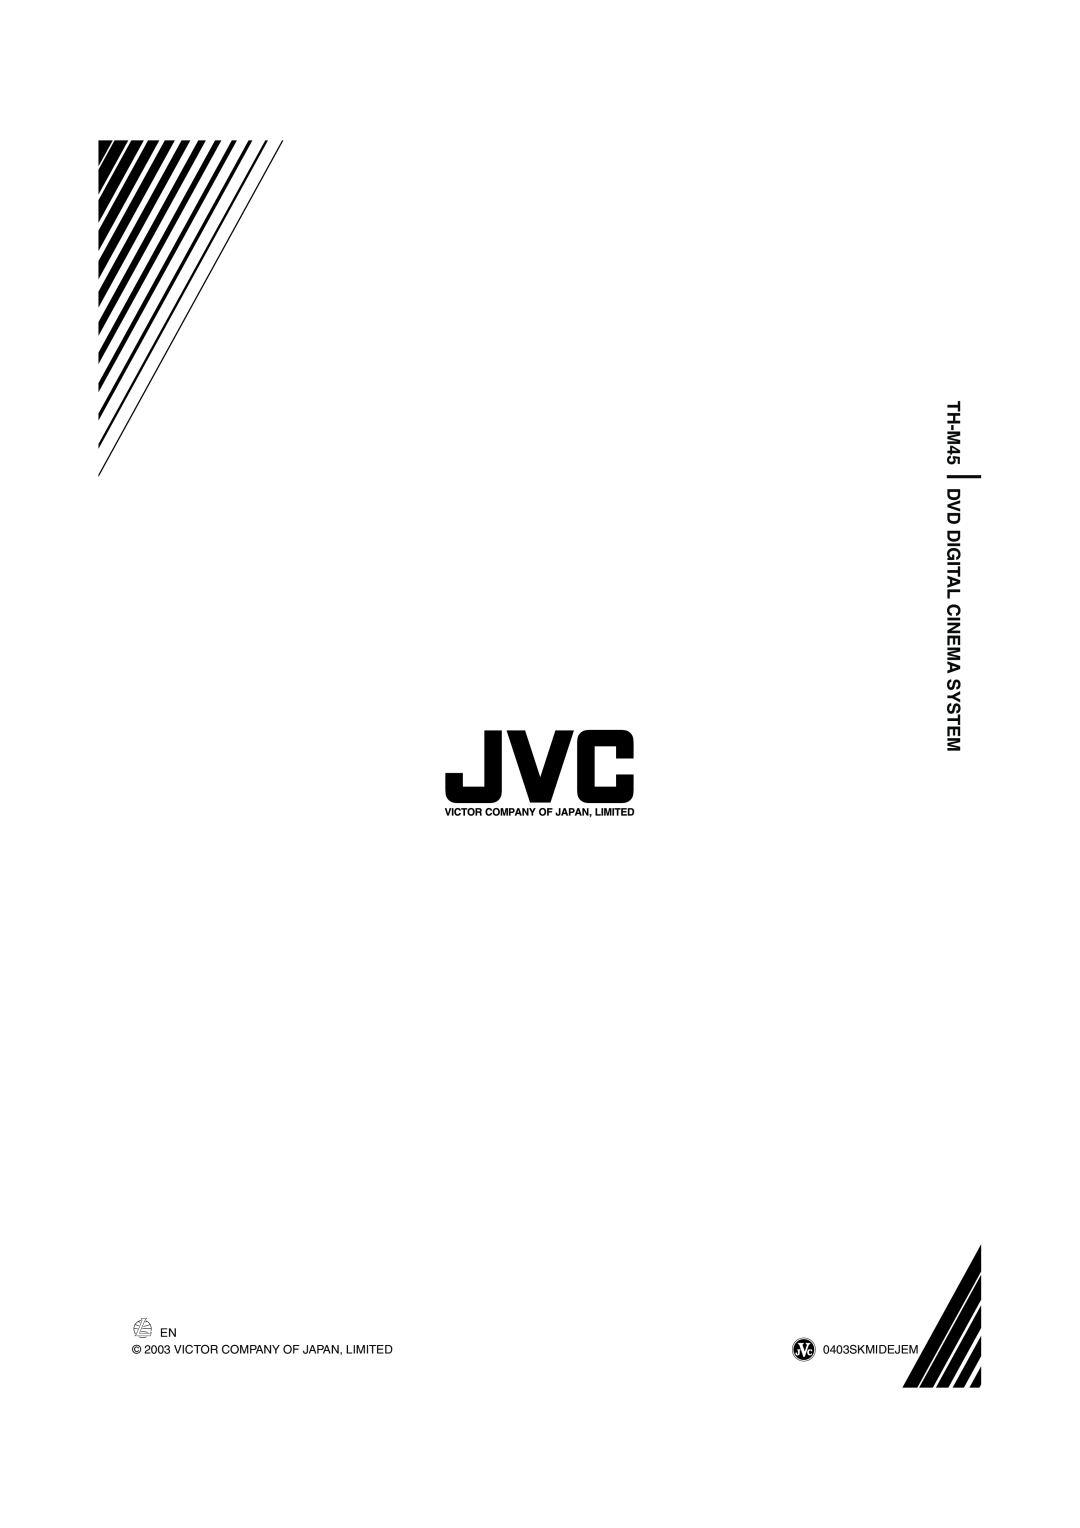 JVC manual TH-M45DVD DIGITAL CINEMA SYSTEM, Victor Company Of Japan, Limited, 0403SKMIDEJEM 